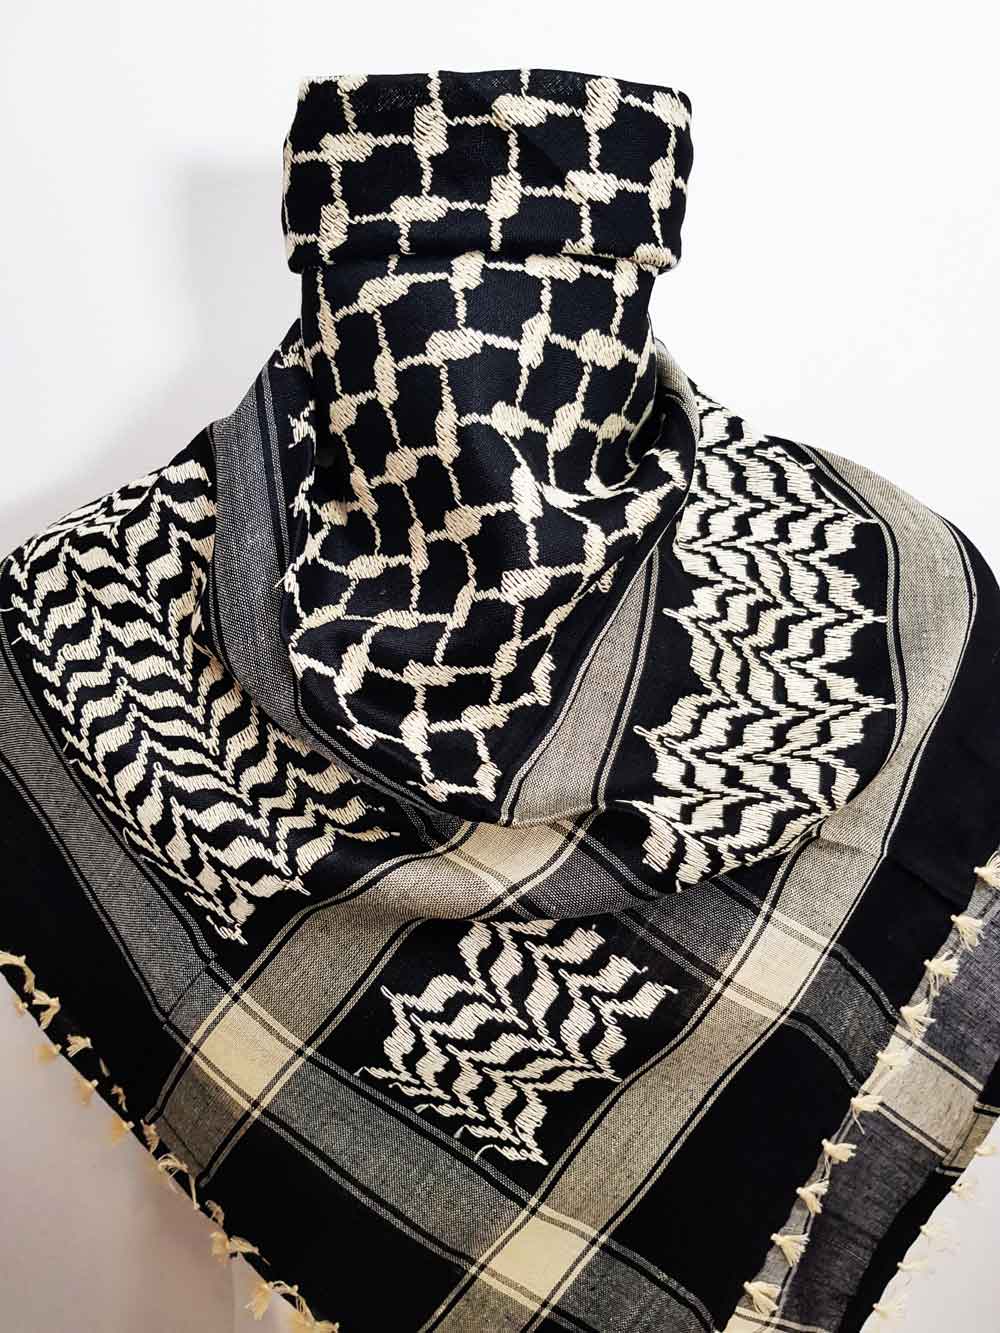 https://www.ethnikka.fr/11685/keffieh-noir-et-beige-foulard-palestinien-pas-cher.jpg